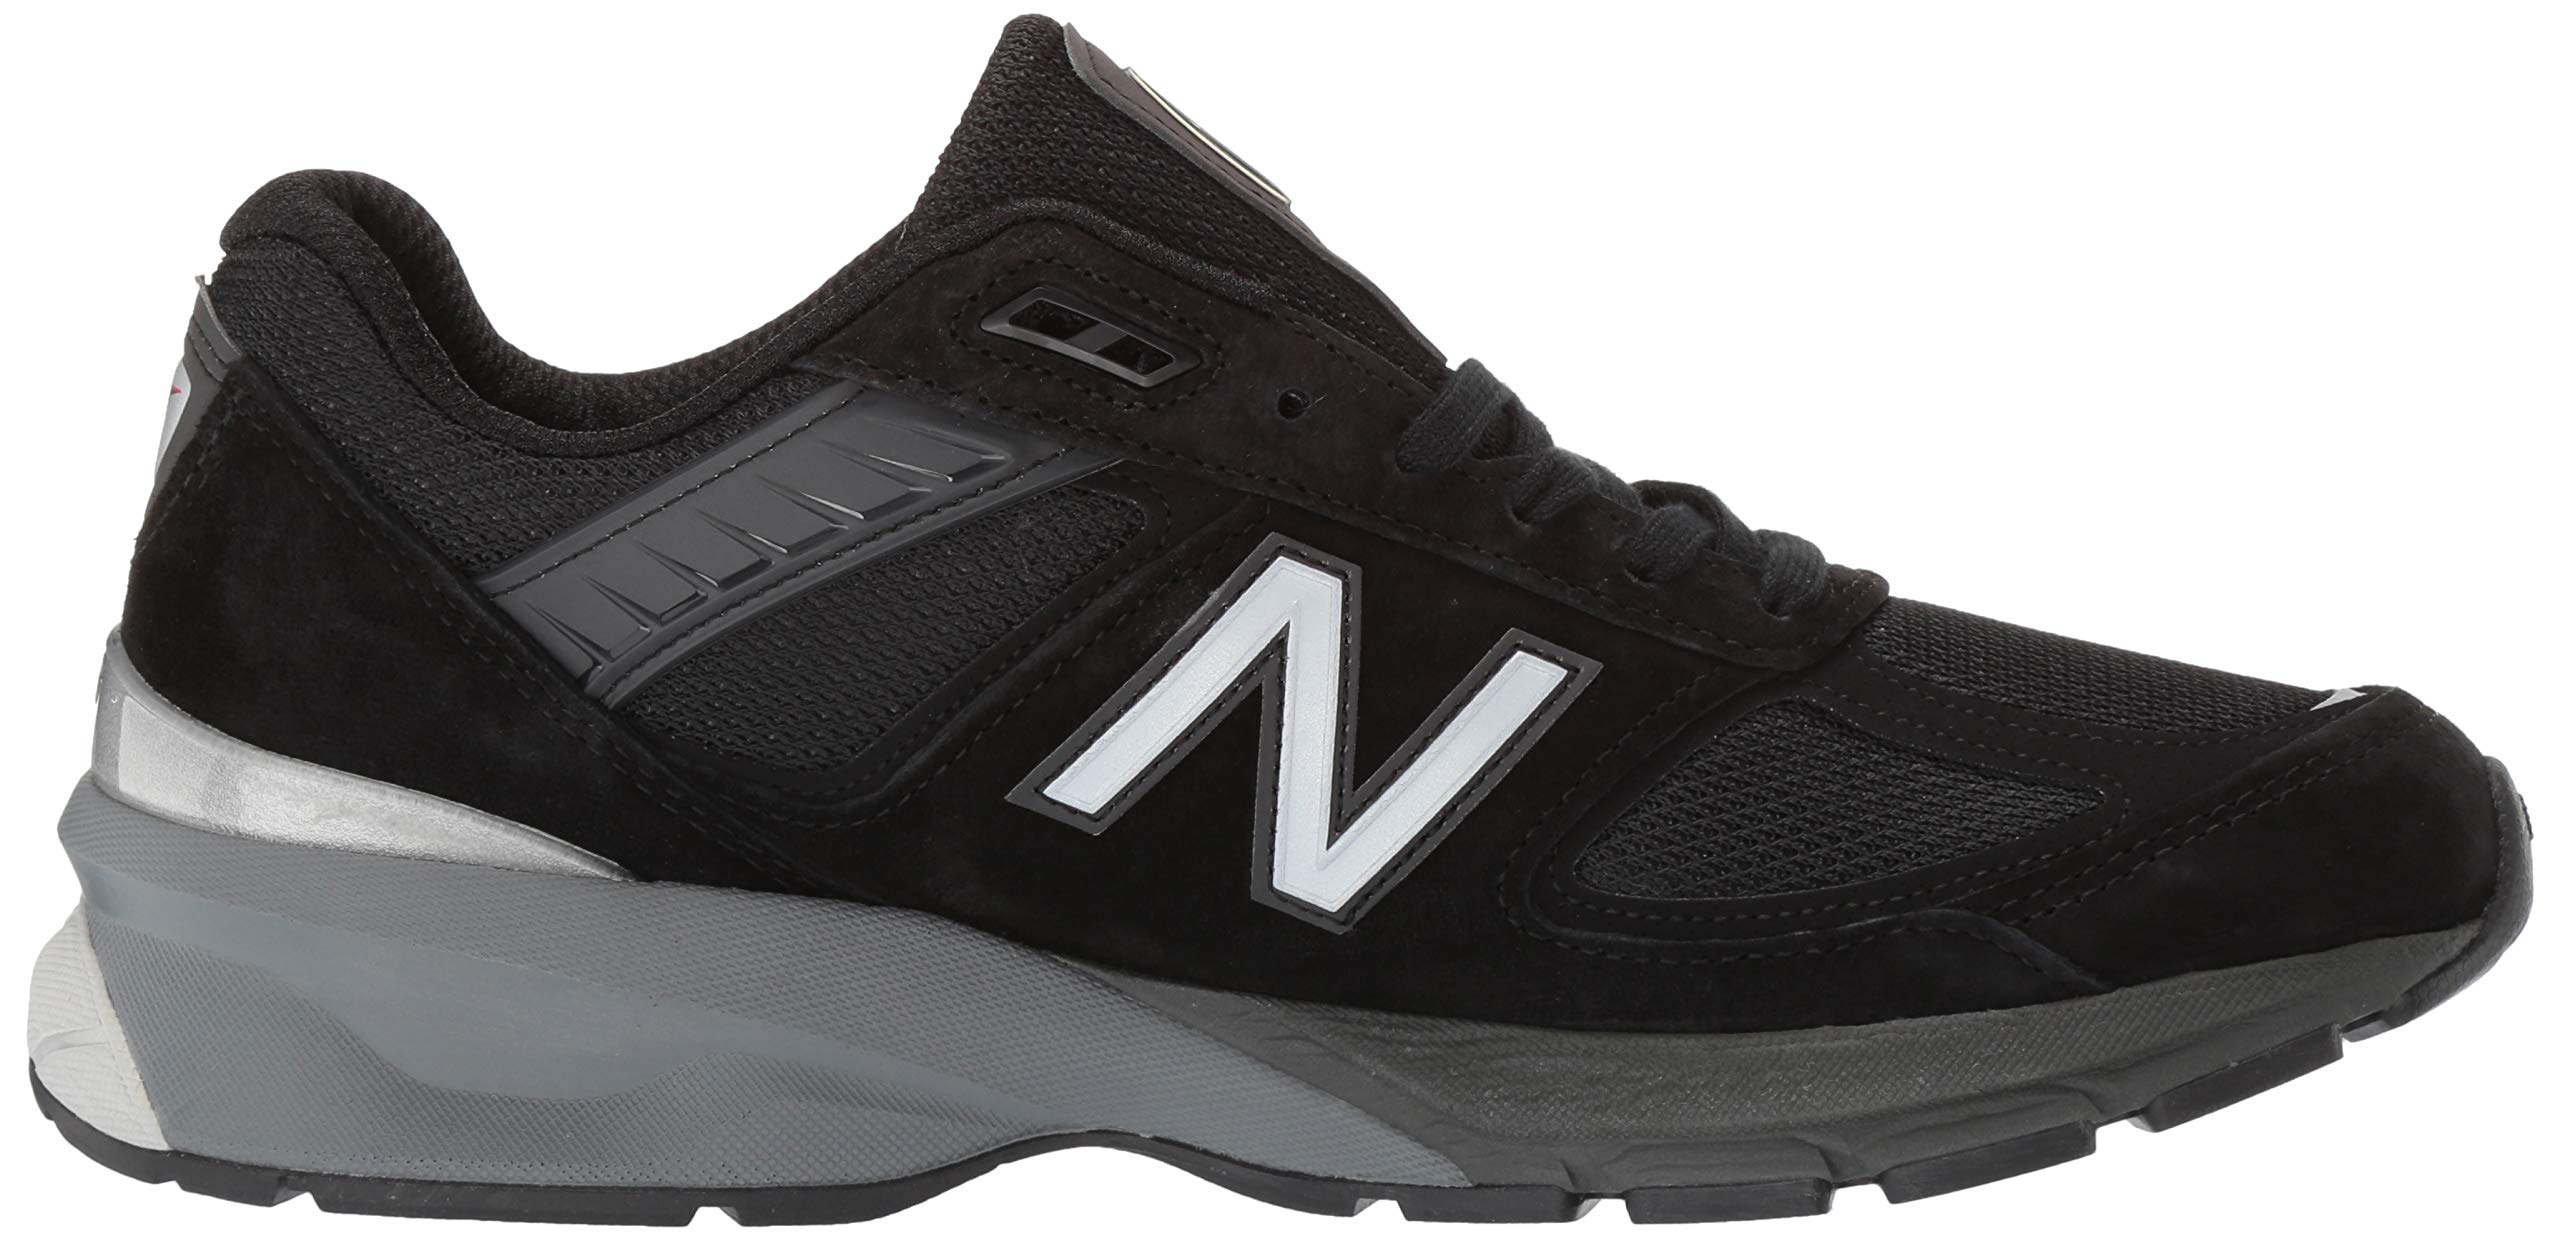 New Balance Narrow Men's 990V5-B Made in USA Sneaker 990BK5 990GL5 990NV5 (12.5 Narrow US Men, Black/Silver) - image 1 of 2